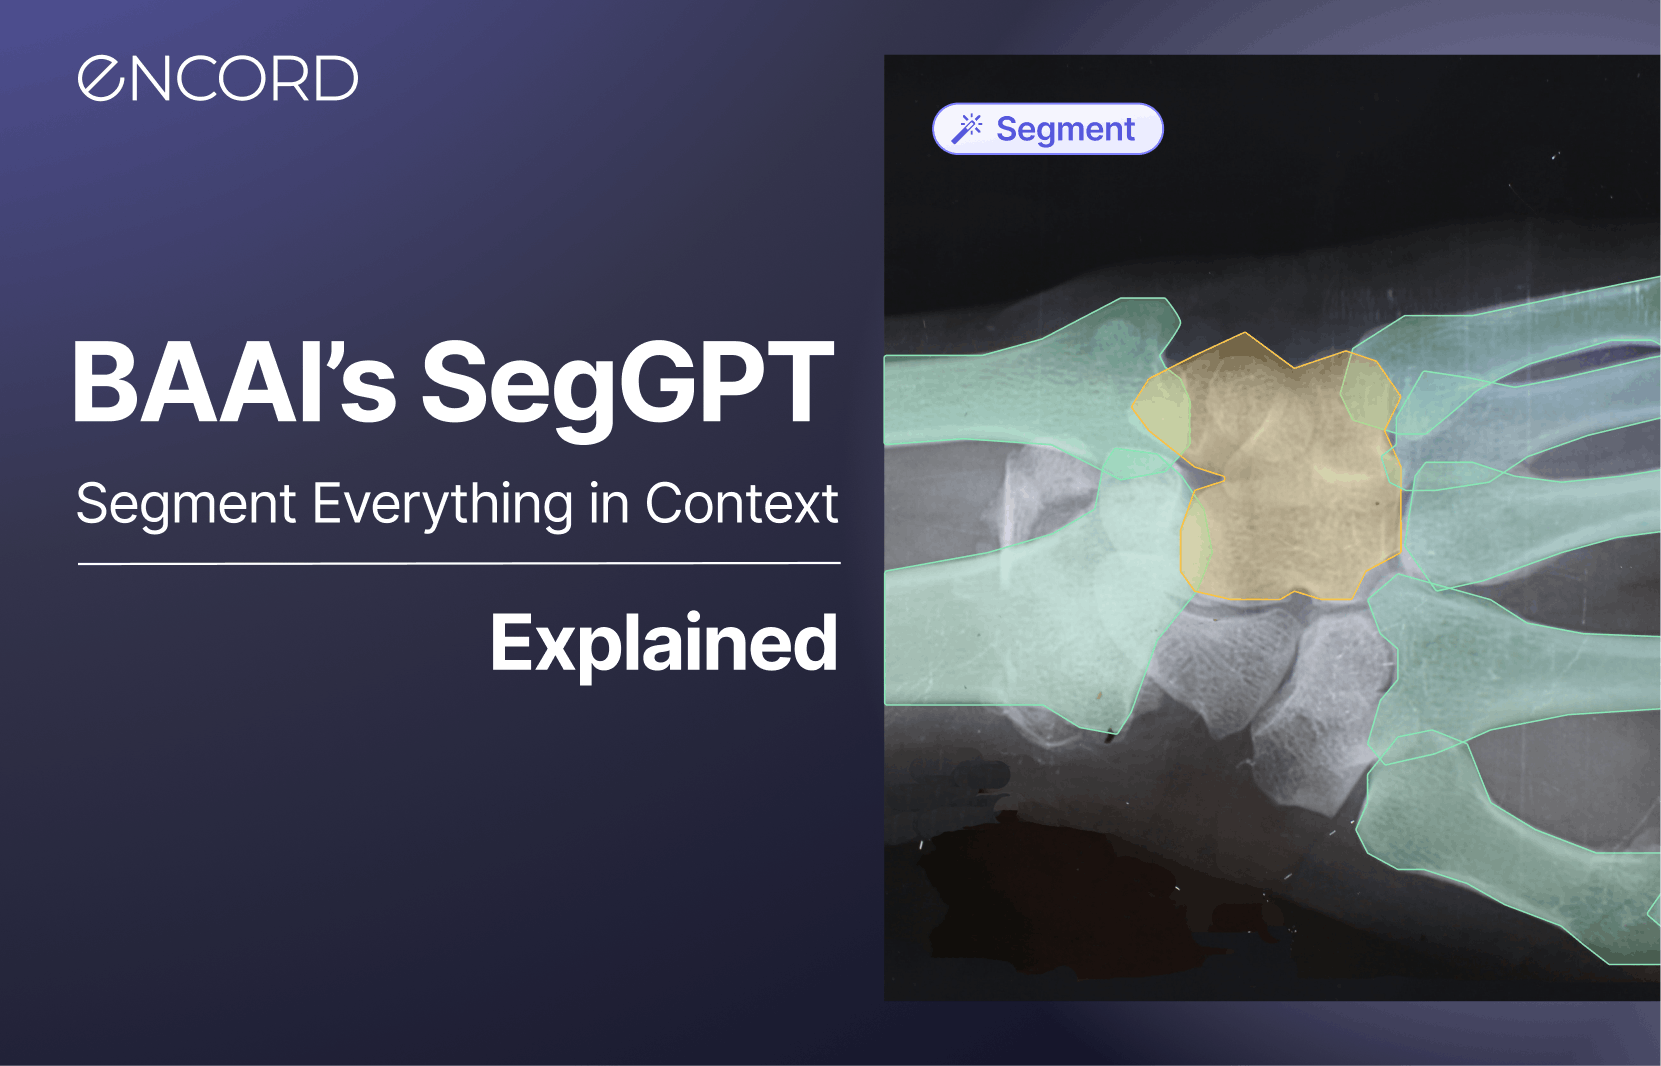 sampleImage_seggpt-segment-everything-in-context-explainer